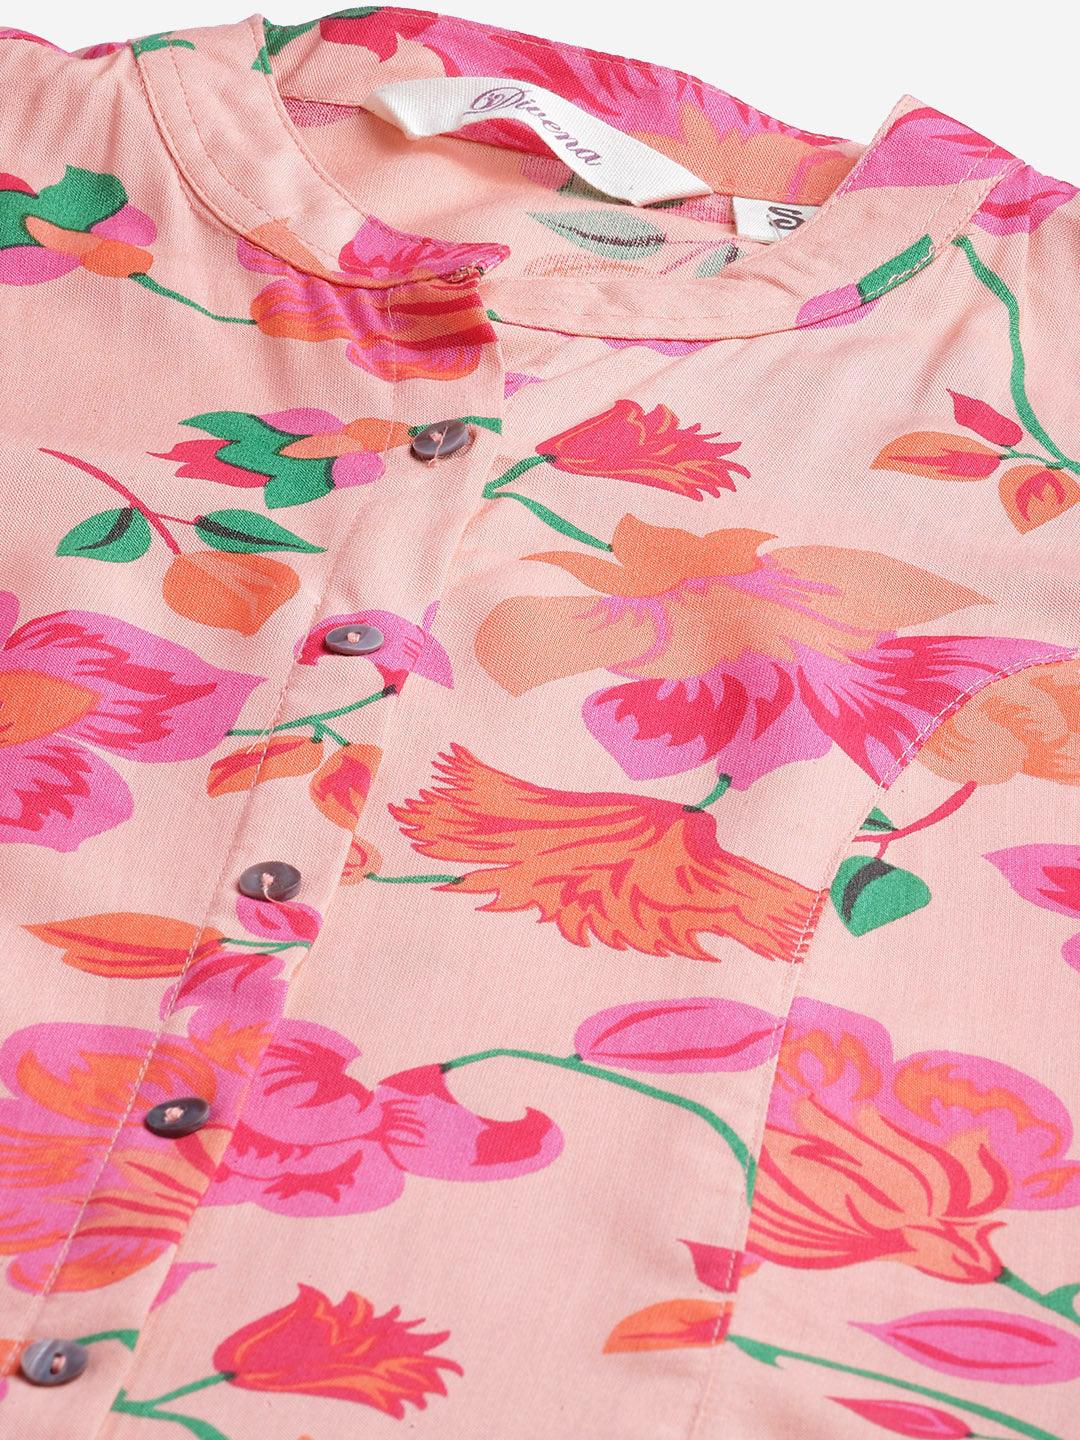 Divena Rayon Peach Floral Print Shirt Style A-Line Top - divena world